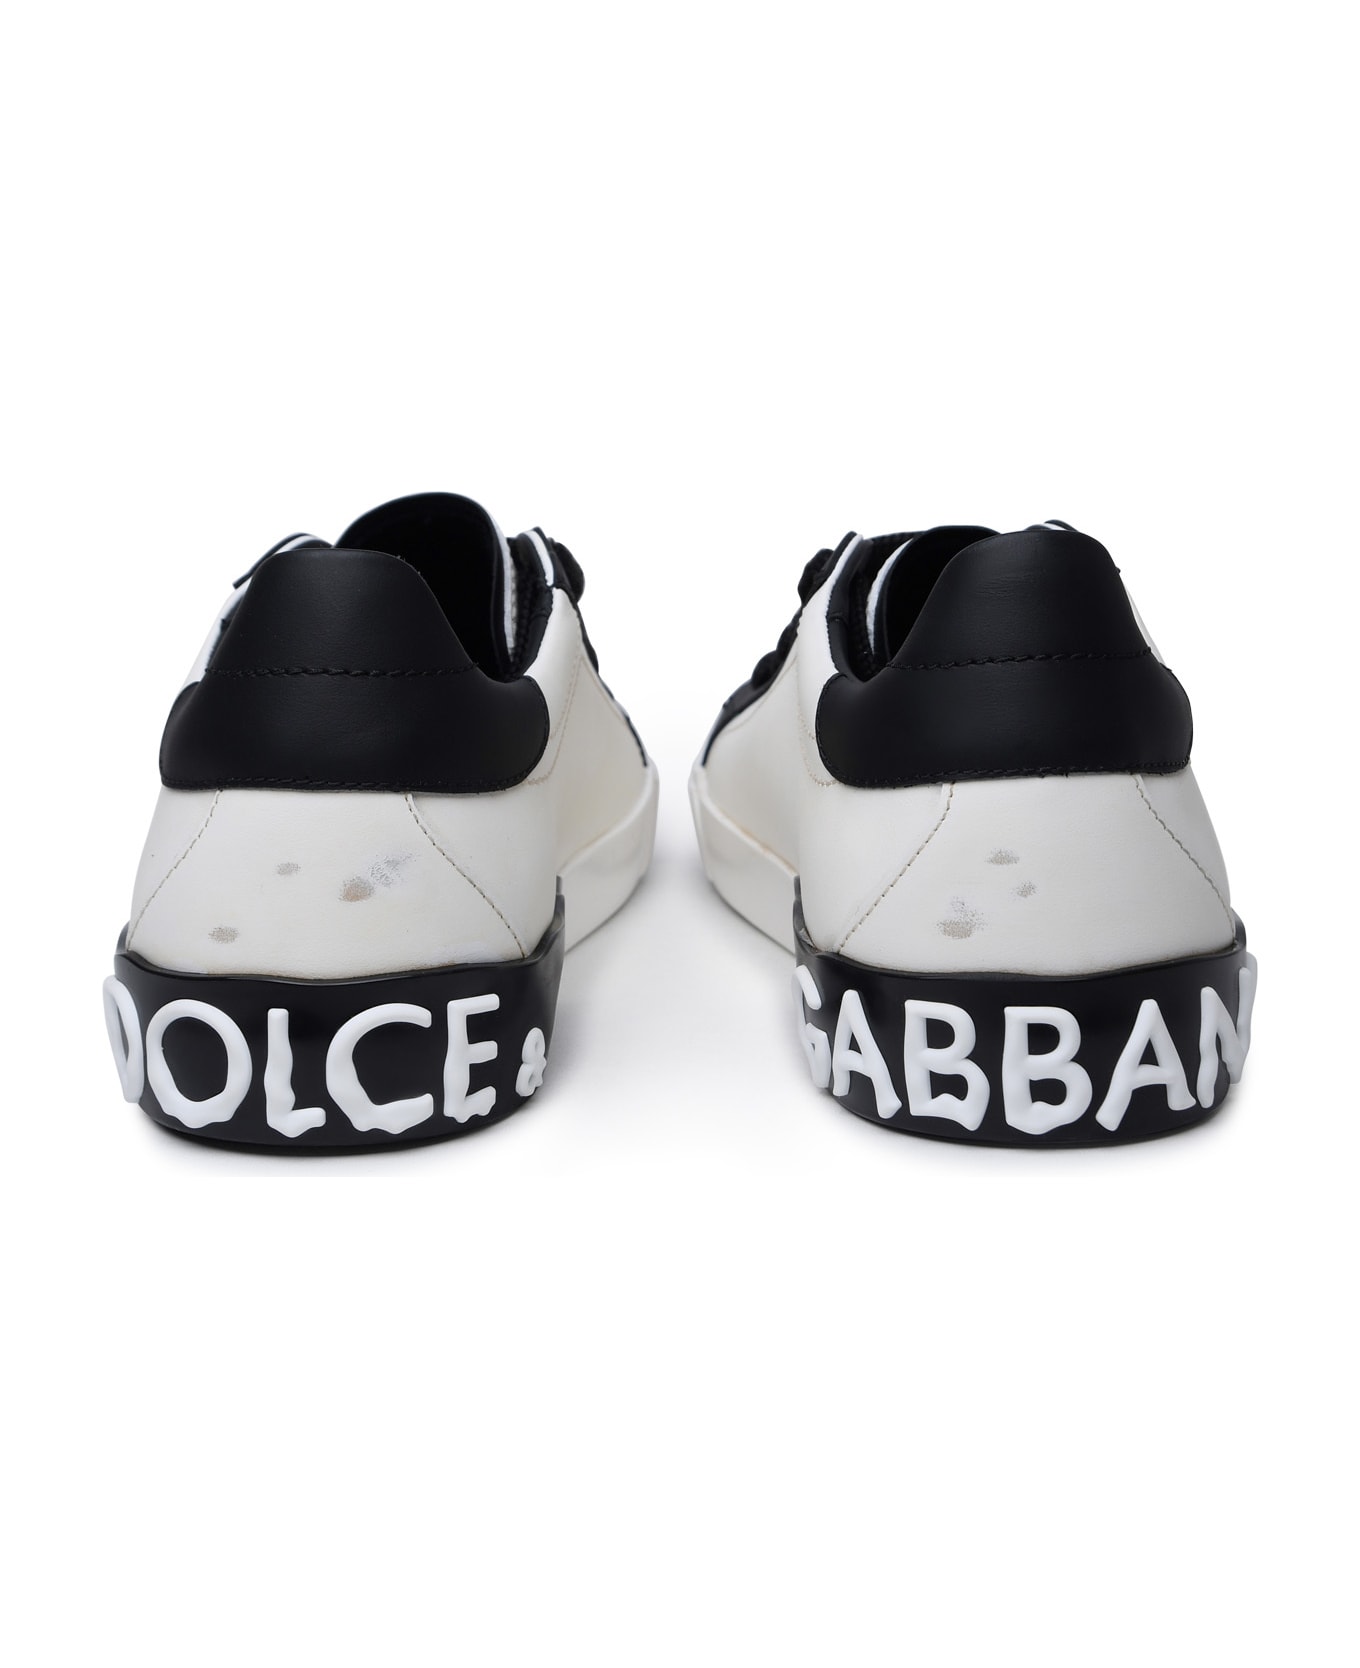 Dolce & Gabbana Portofino Vintage Leather Sneaker - white/black スニーカー